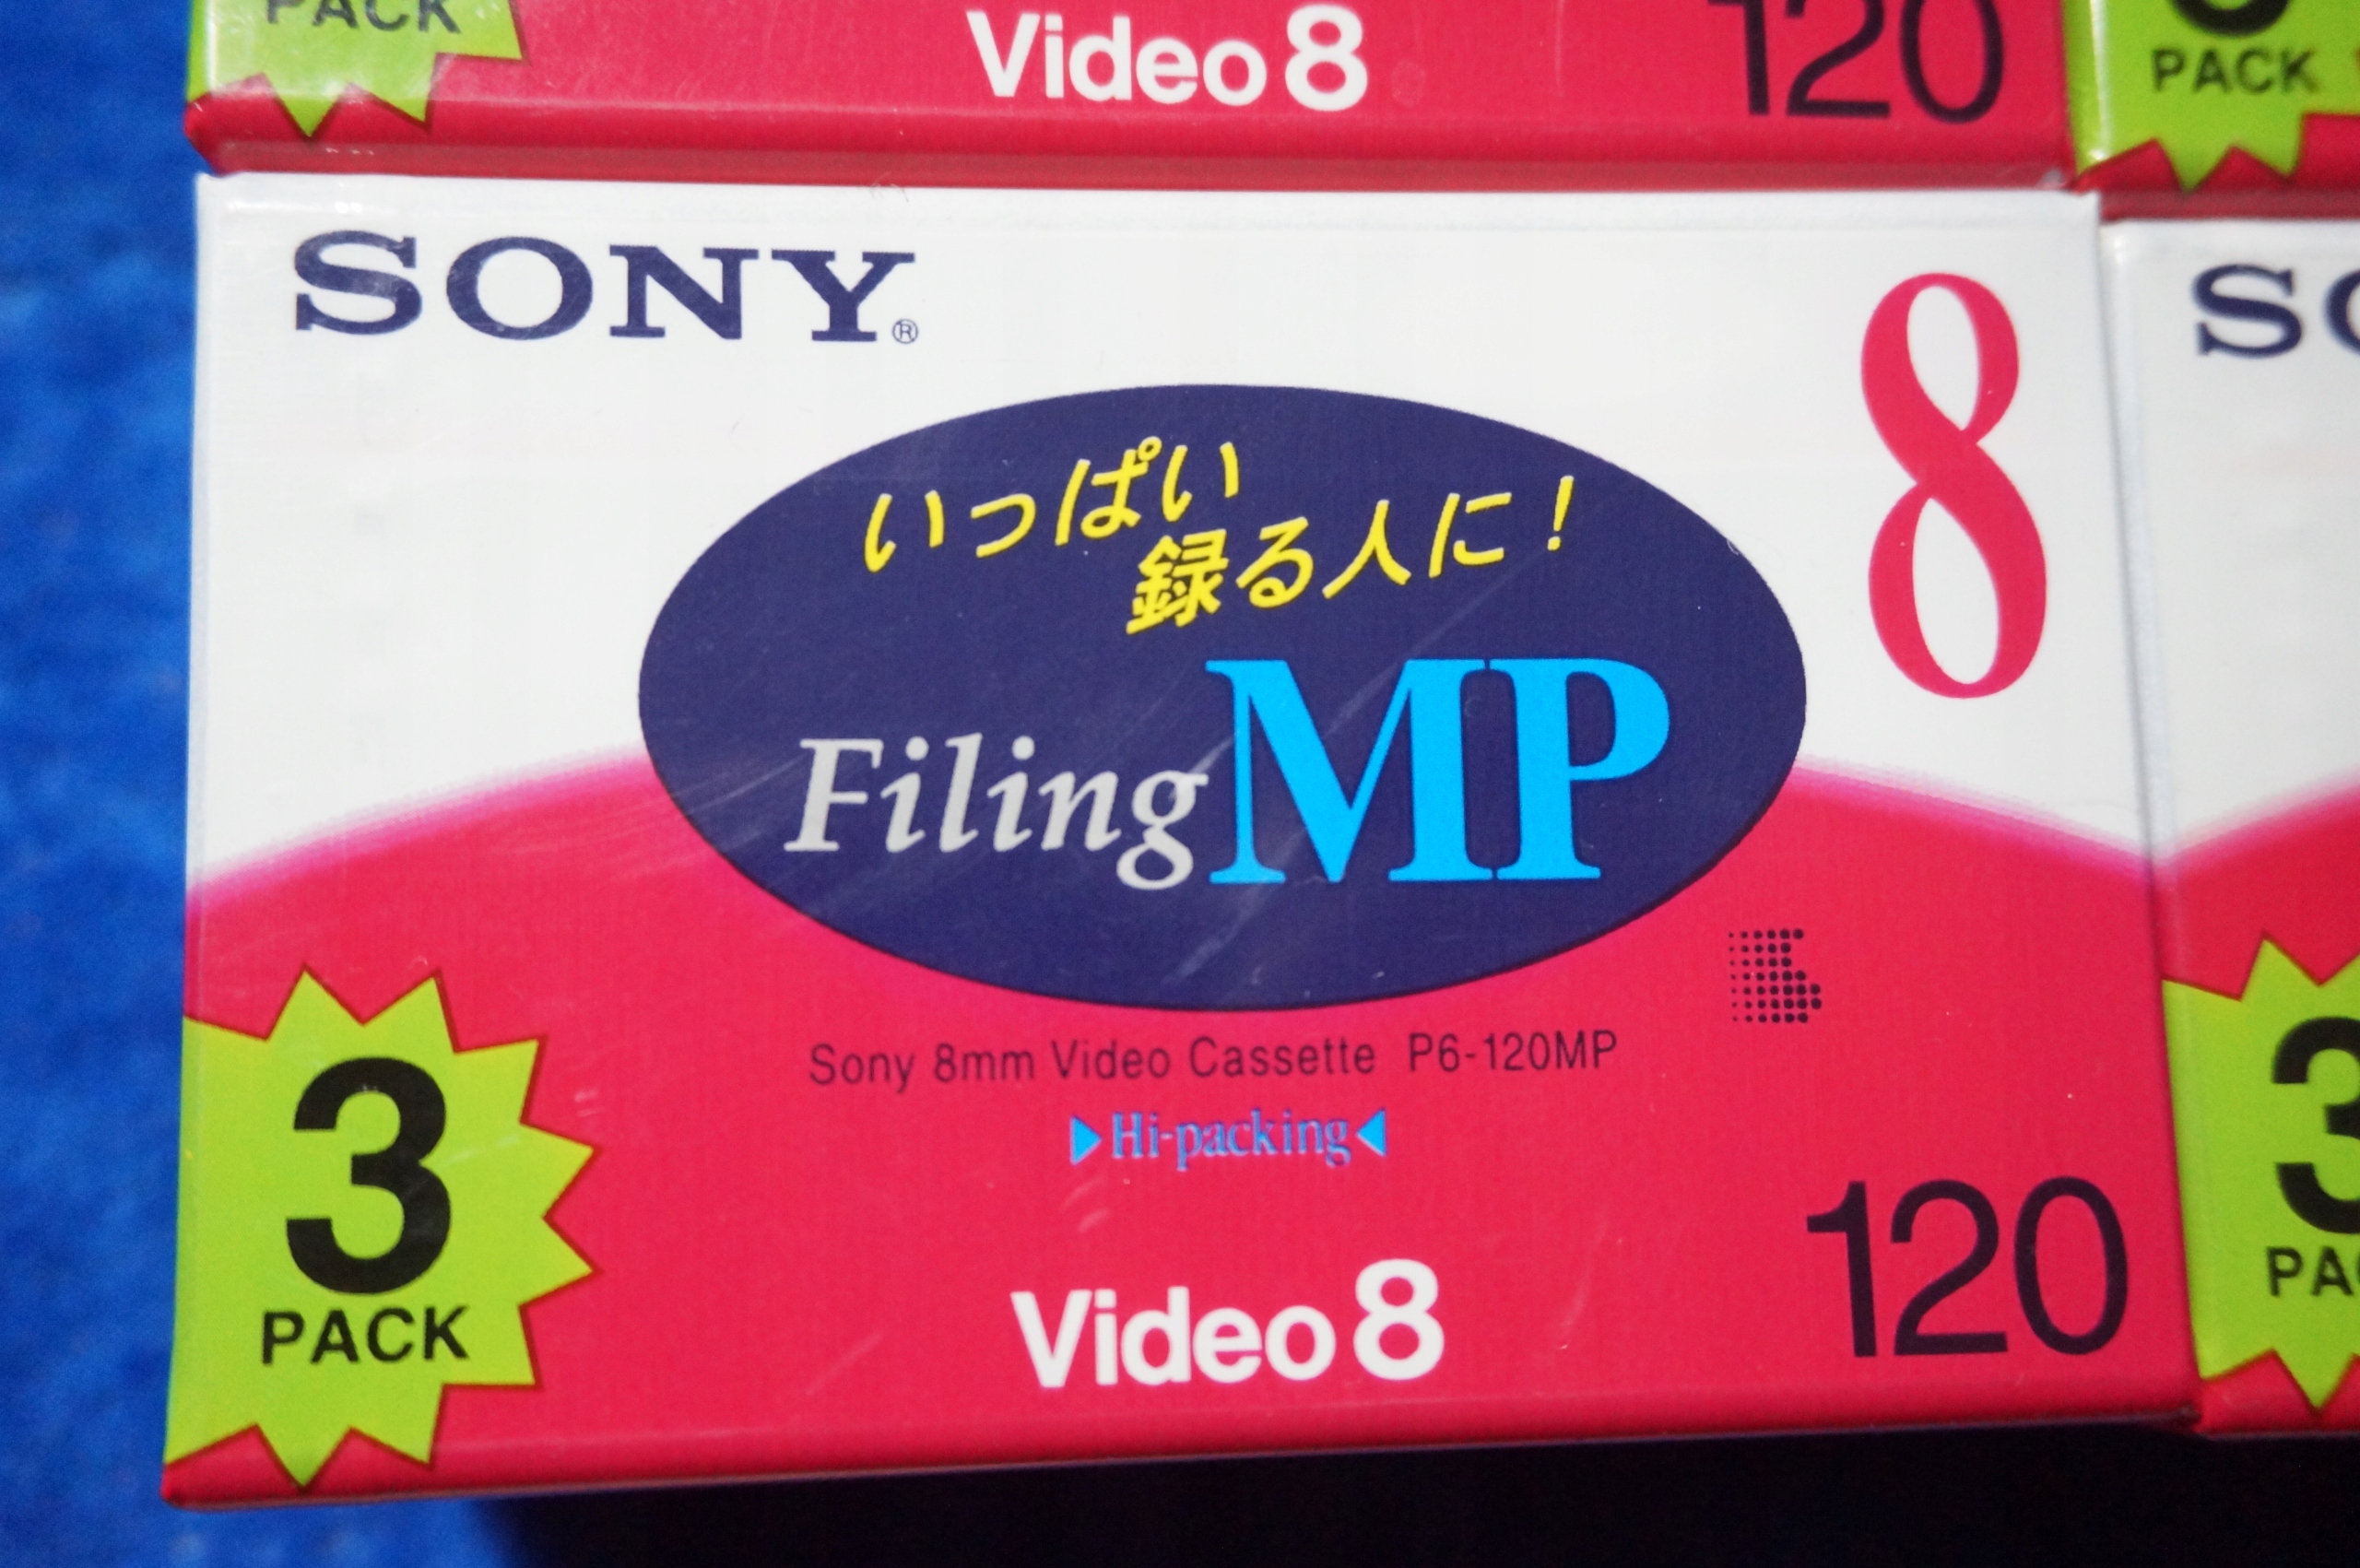 3x Kazety Pro Kamery Video8 Sony Filing P6-120MP 120 min